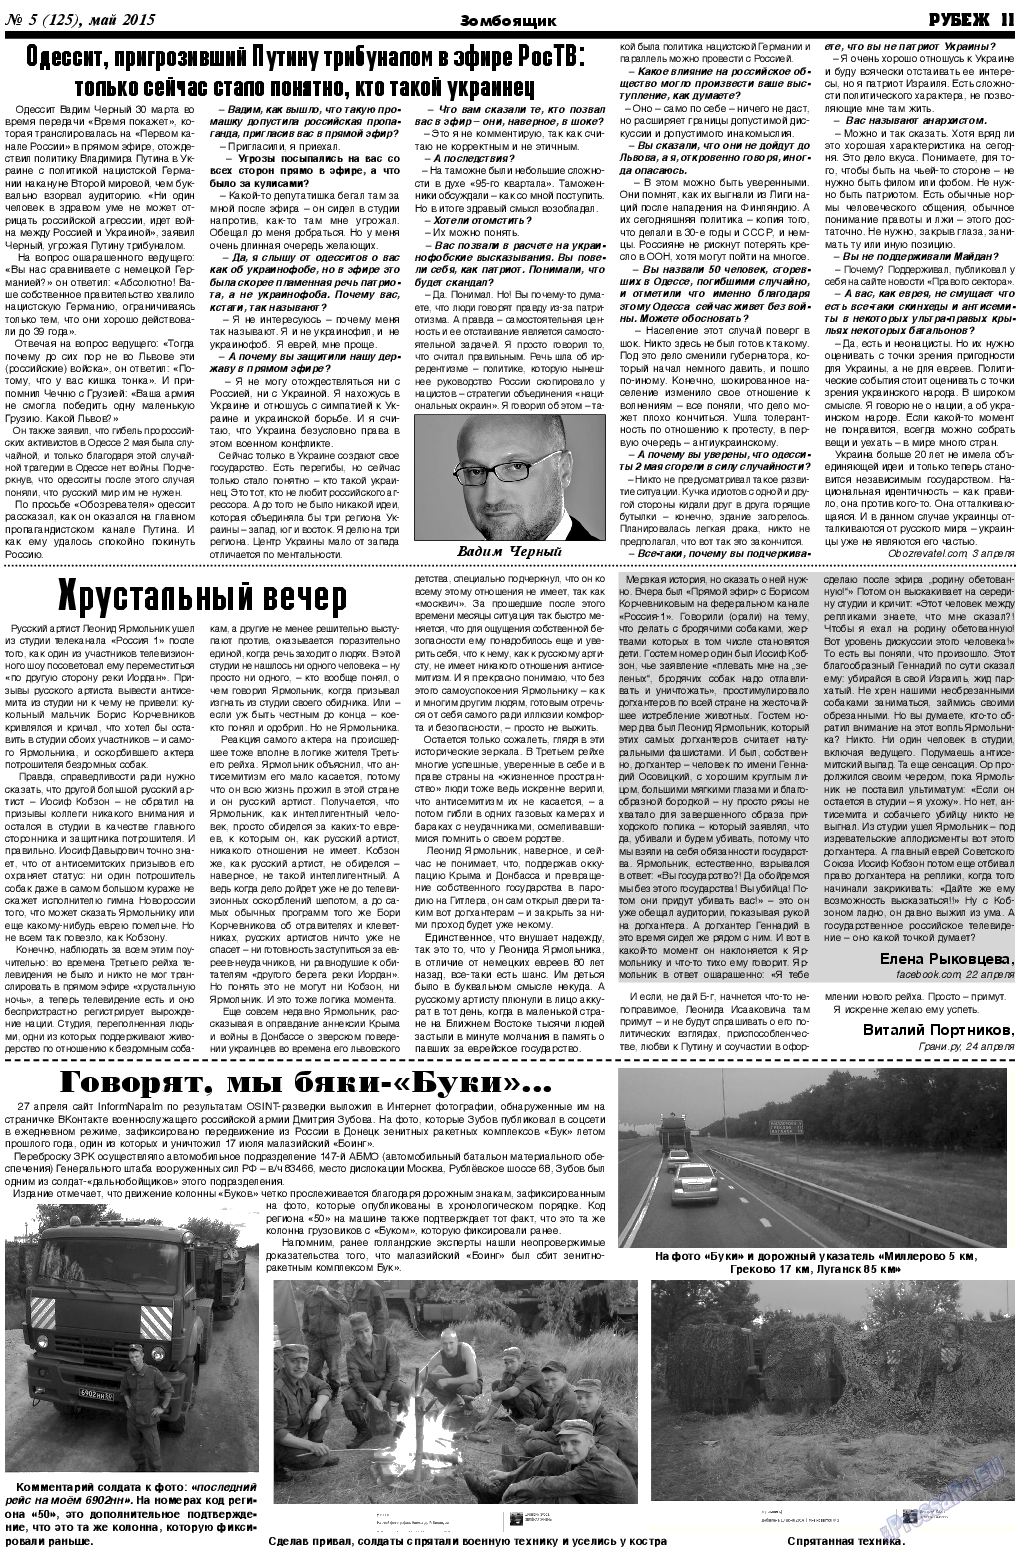 Рубеж, газета. 2015 №5 стр.11